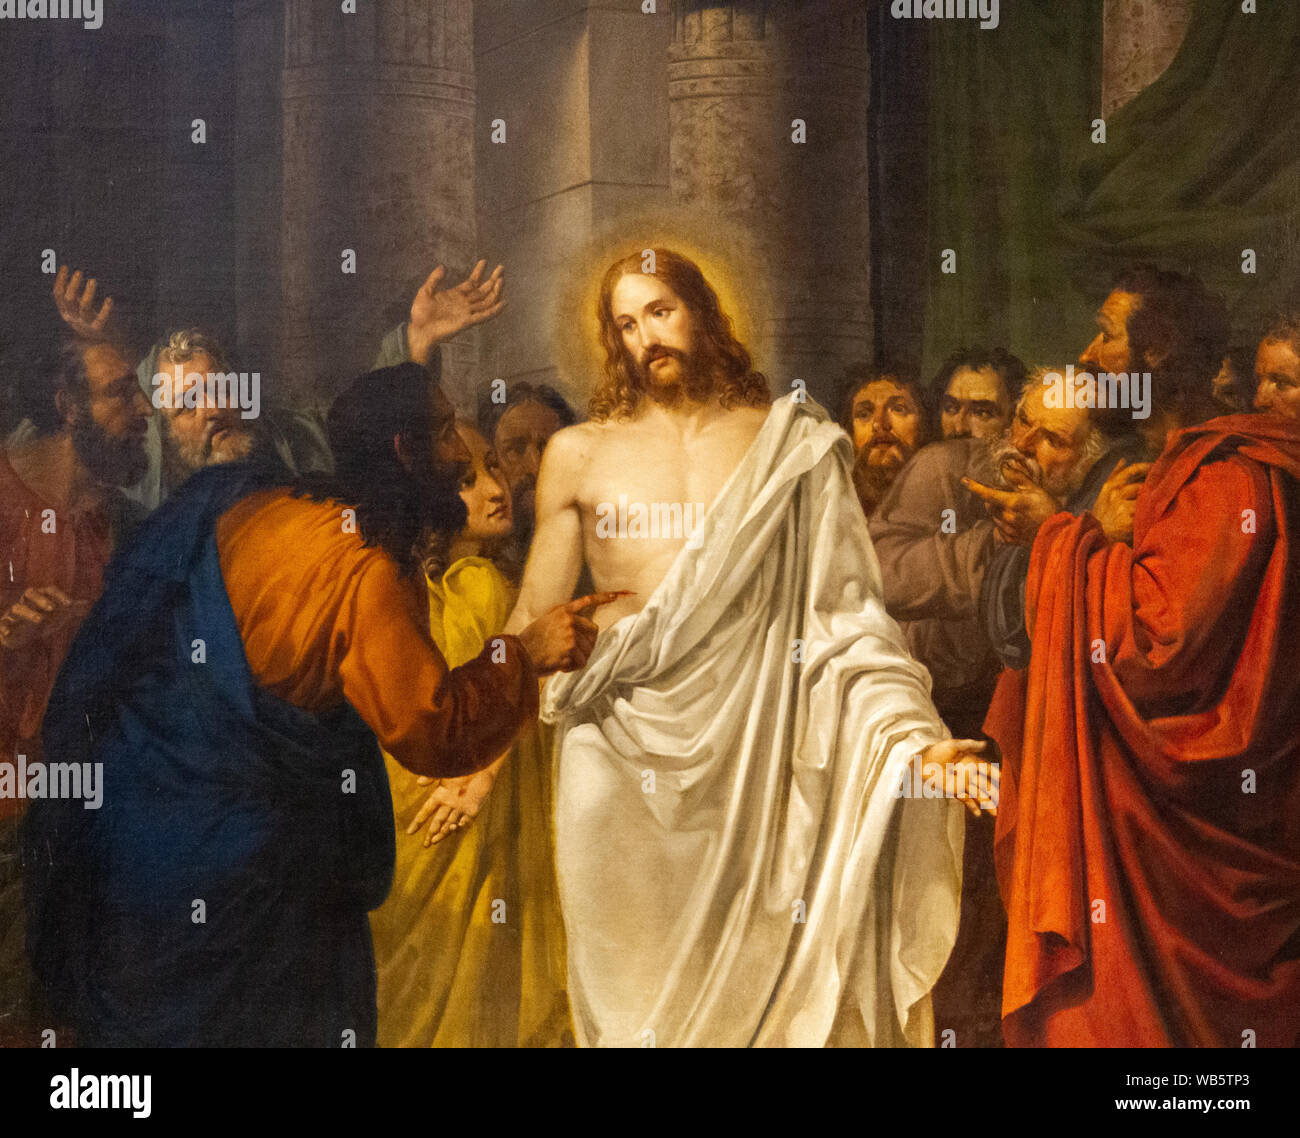 The painting of Resurrected Jesus Christ with Thomas the apostle and other apostles by Sebastiano Santi in 'Chiesa dei Santi Apostoli' church. Stock Photo